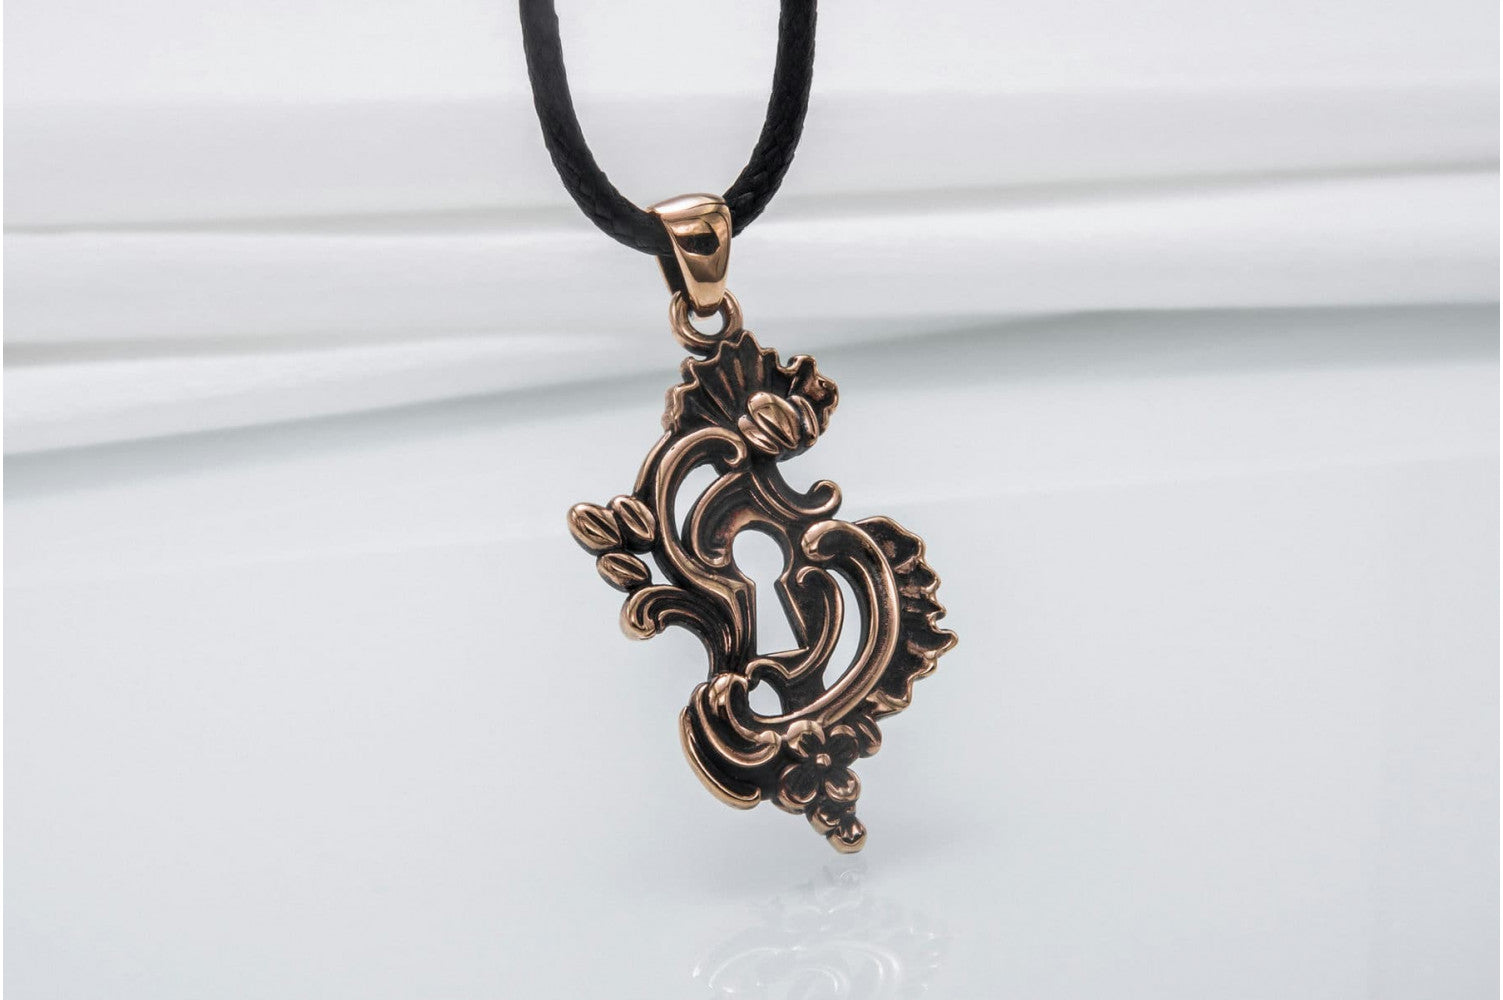 Keyhole Pendant with Flowers Ornament Bronze Handmade Jewelry - vikingworkshop